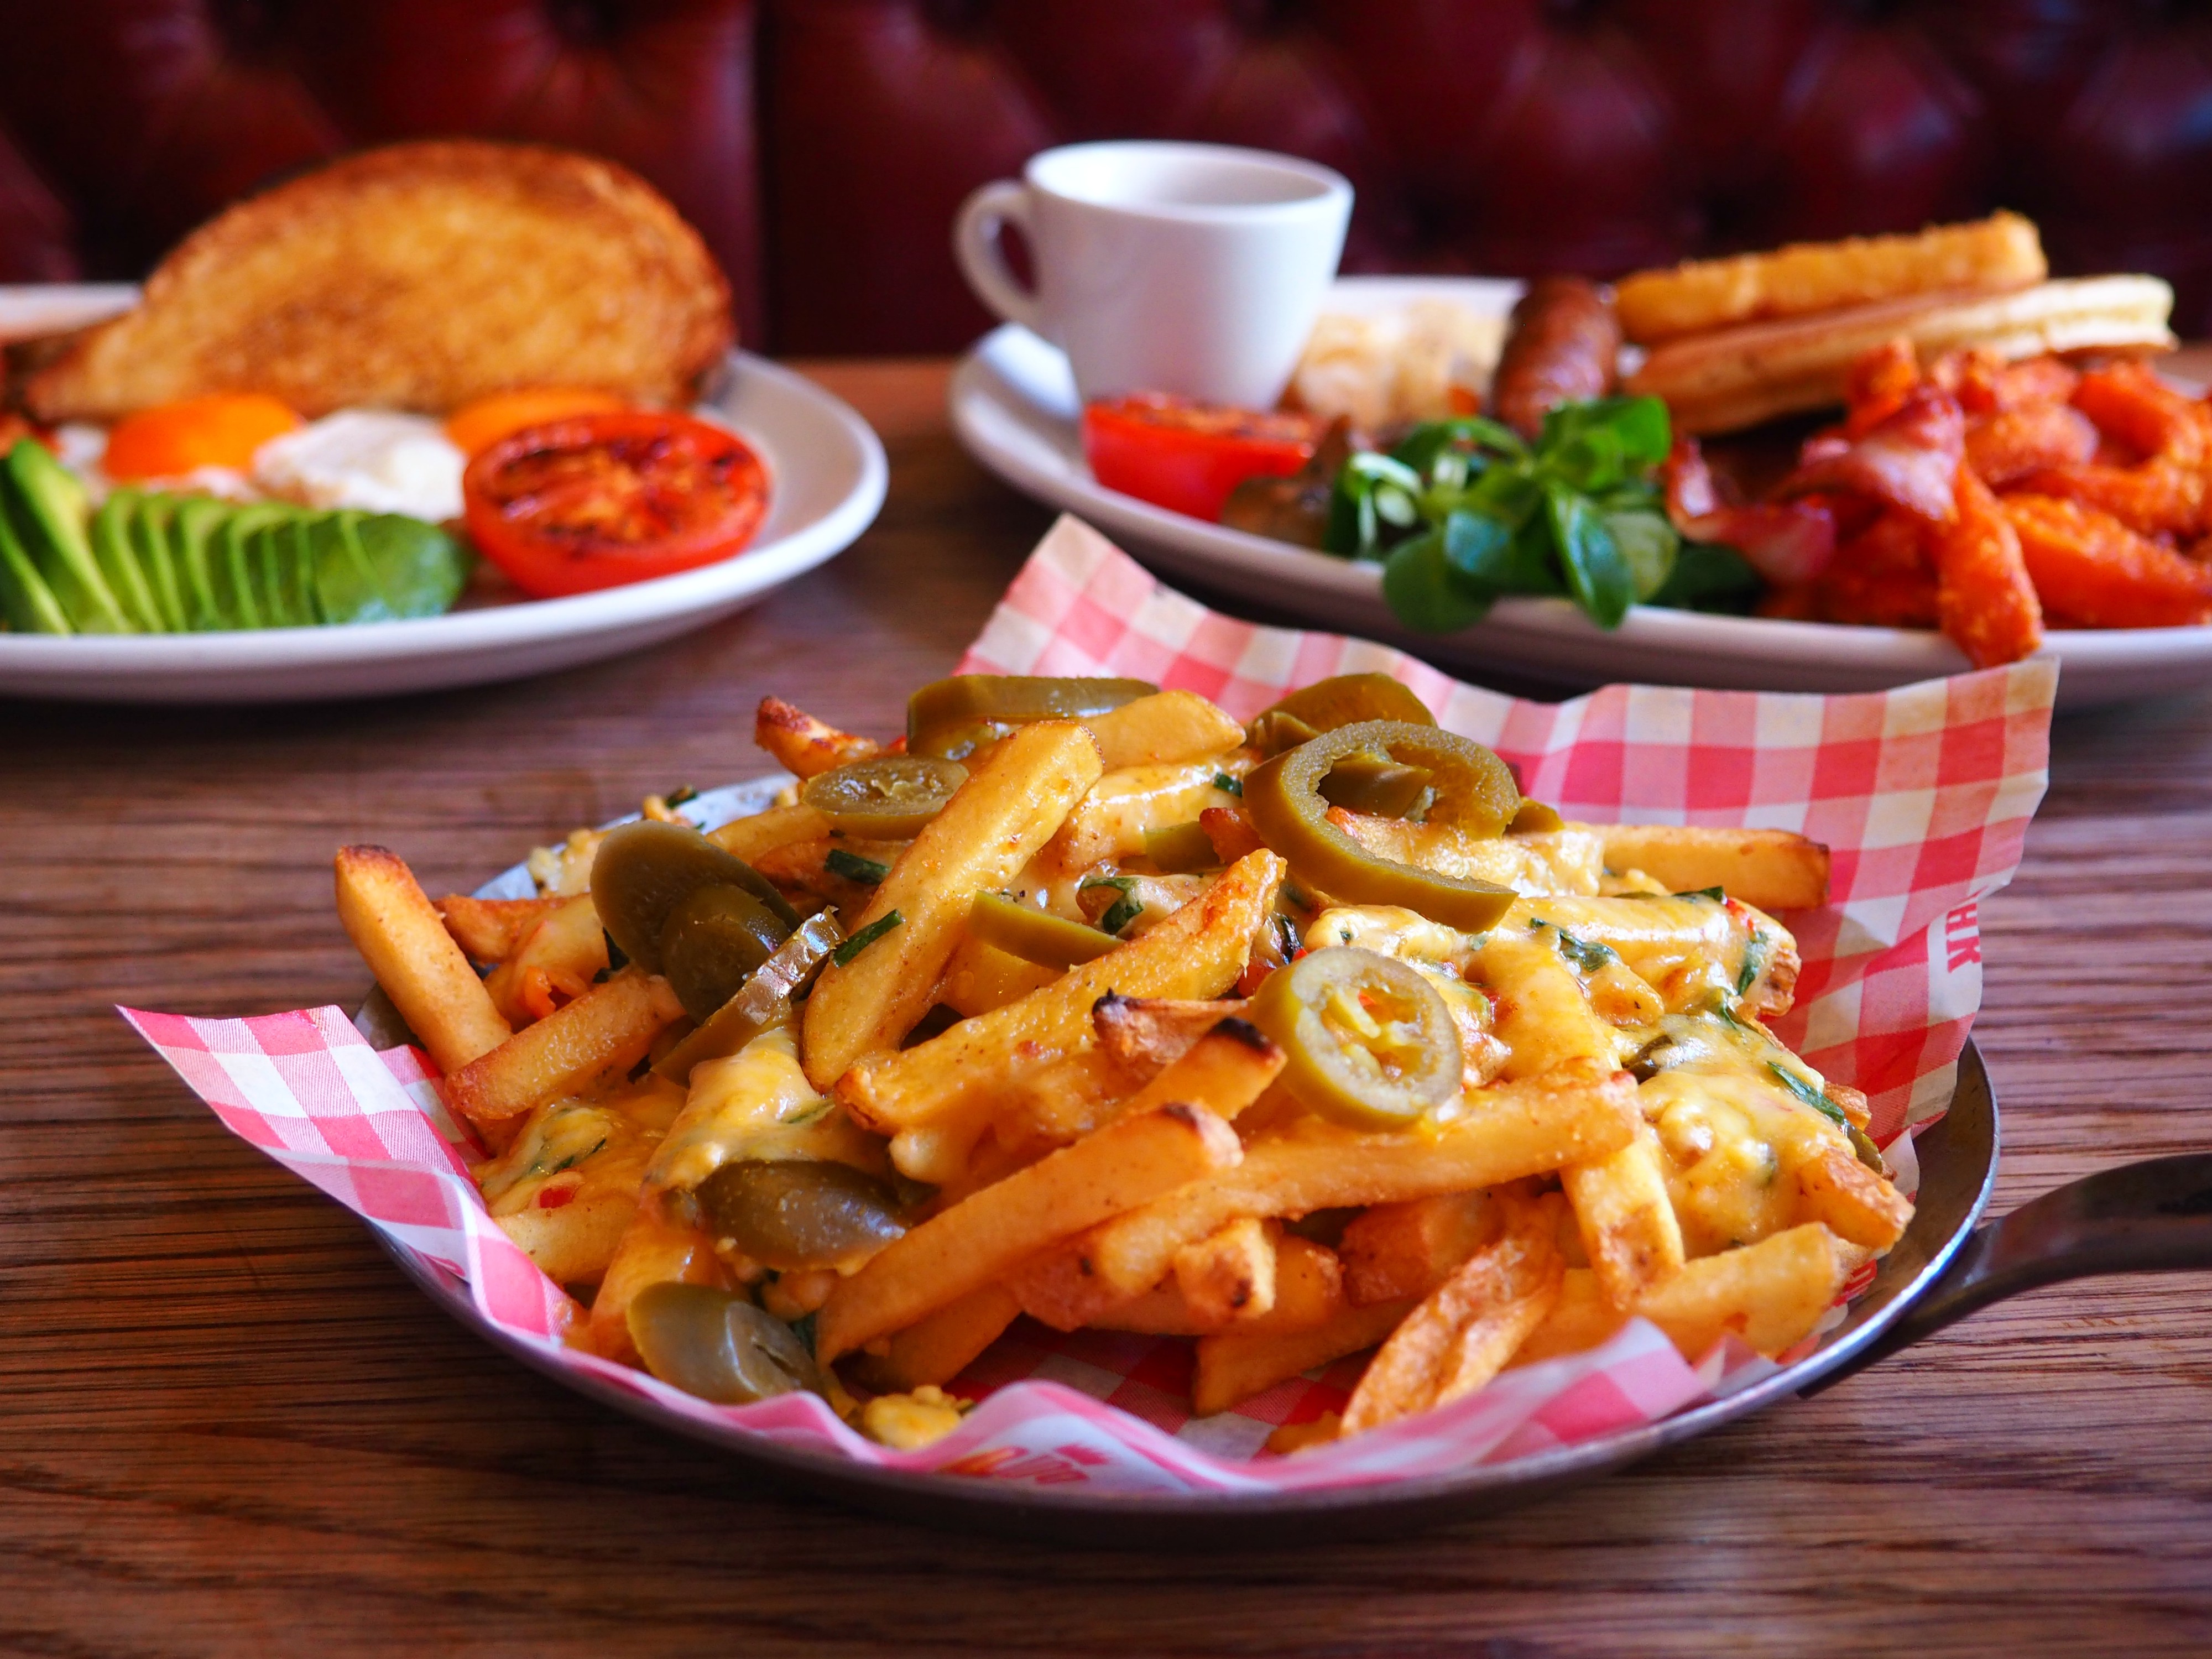  <img src="ana.jpg" alt="ana veggie friendly brunch with chili cheese fries "/> 